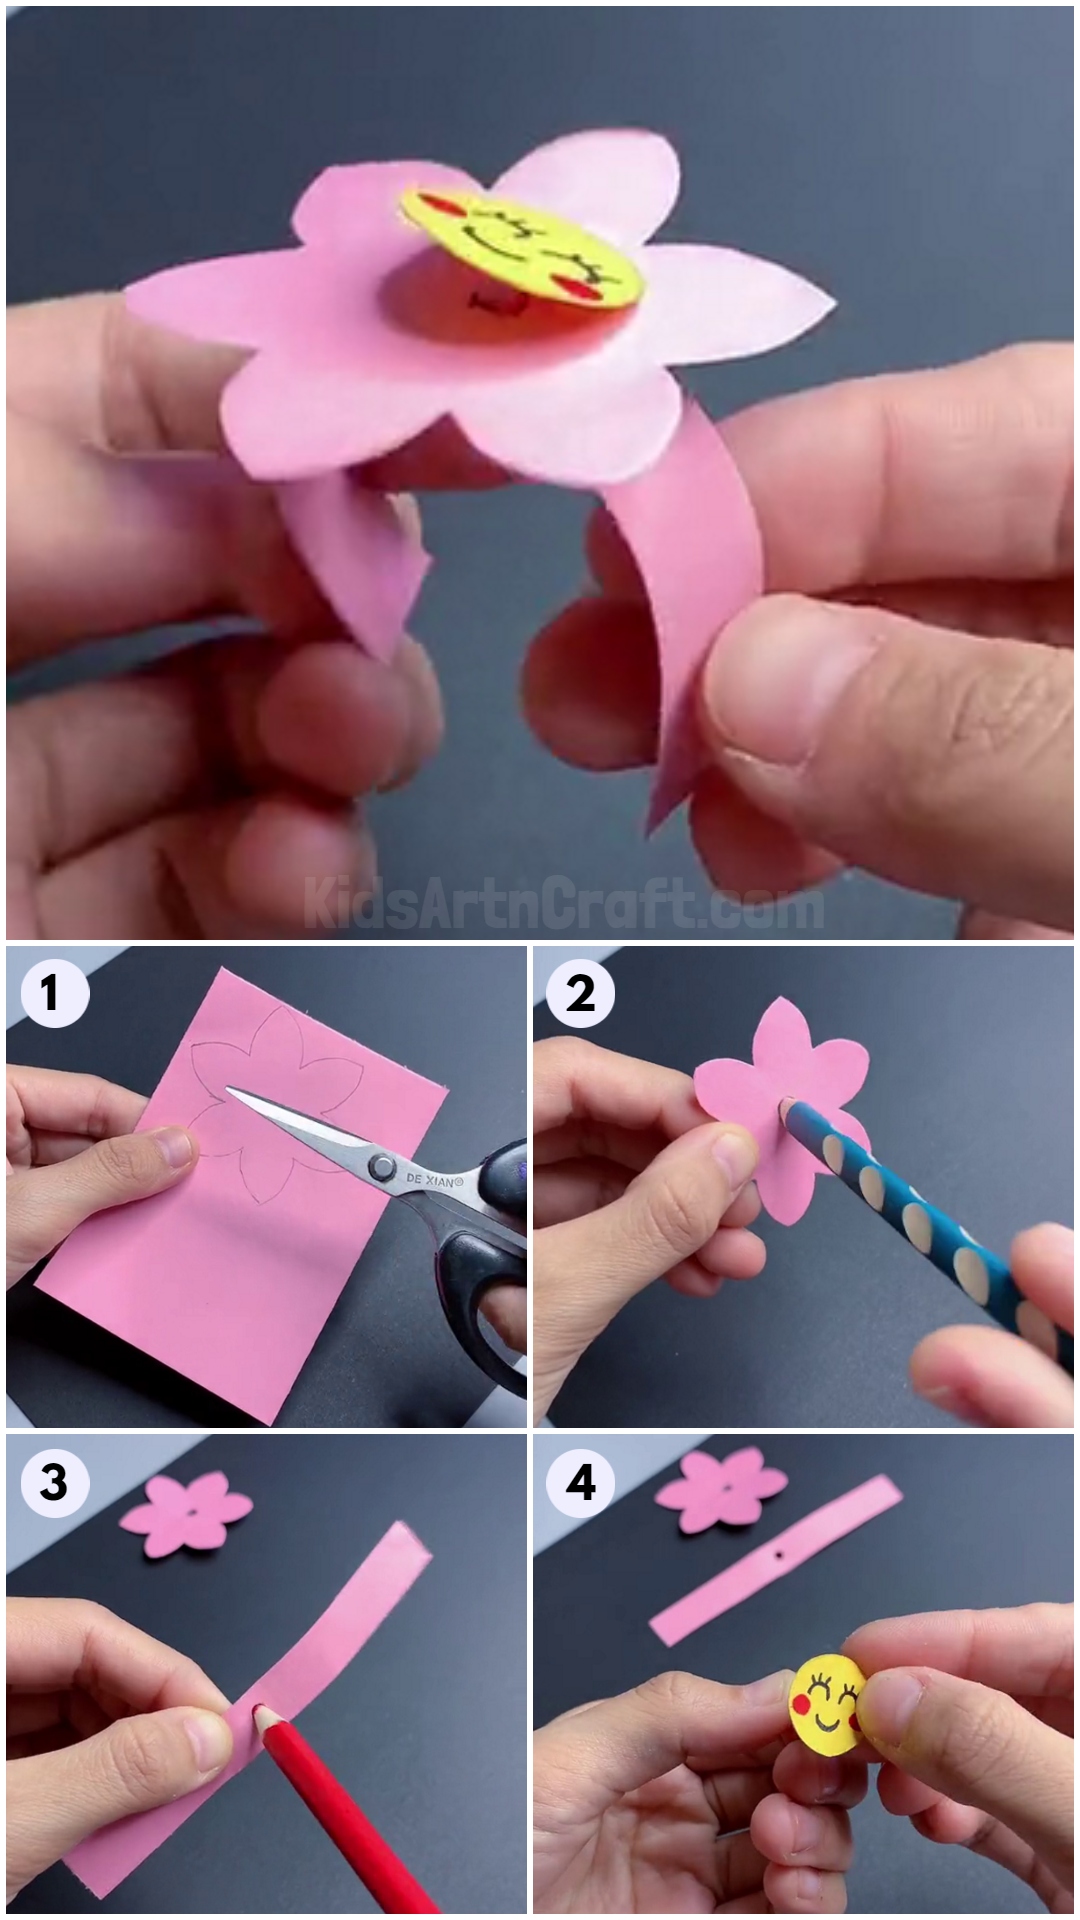 How to Make Paper Flower Ring Easy Tutorial